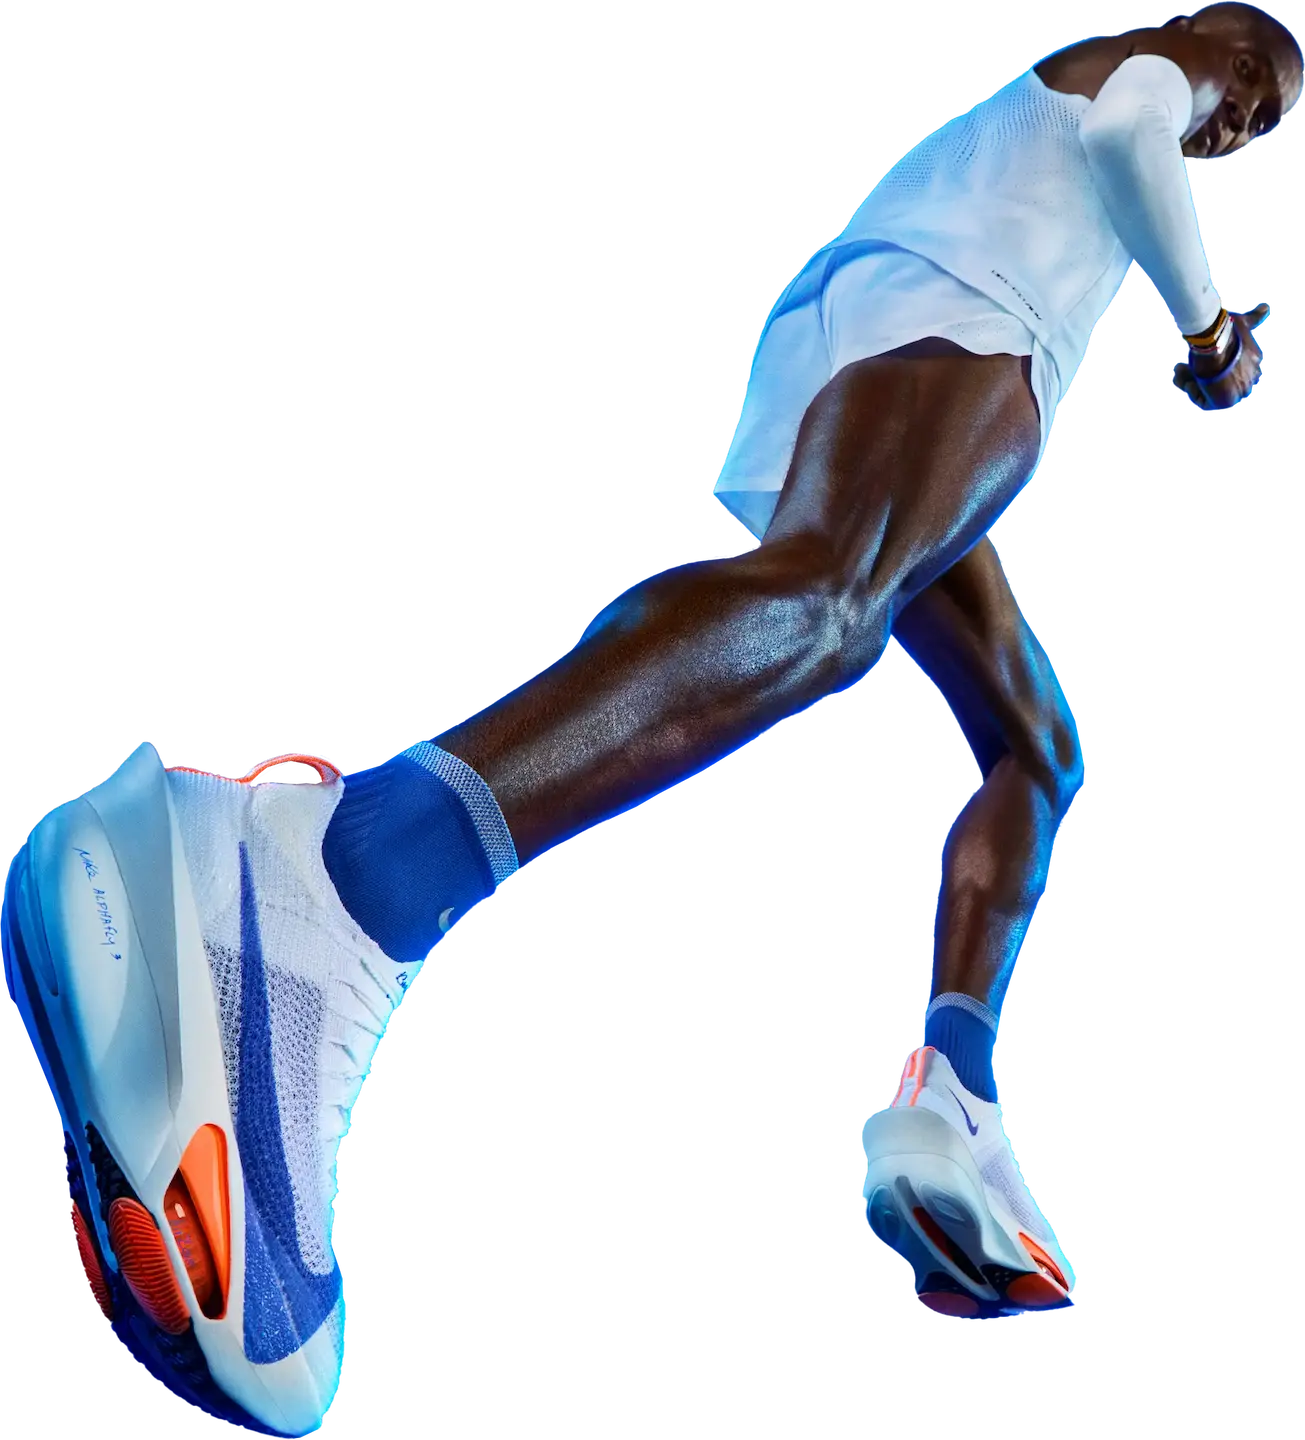 Eliud Kipchoge wearing Nike running apparel and Nike Alphafly 3